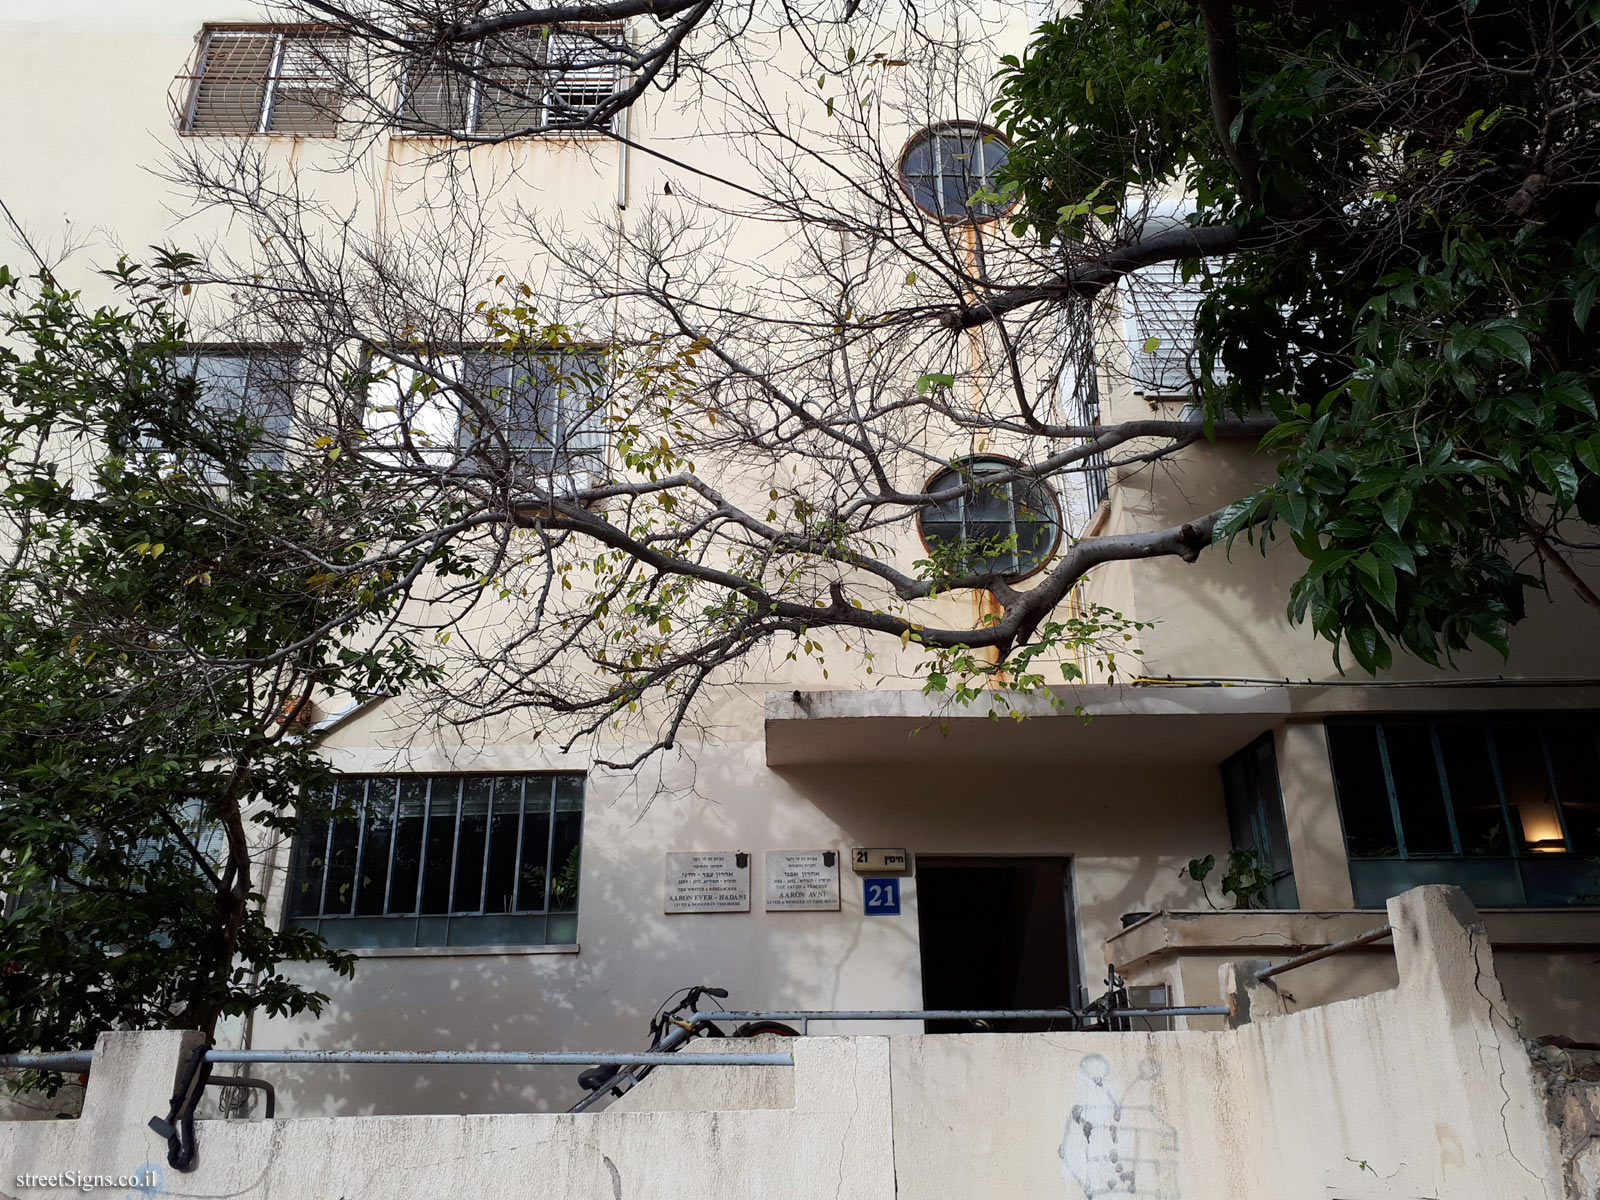 The house of Aaron Avni - Khisin St 21, Tel Aviv-Yafo, Israel